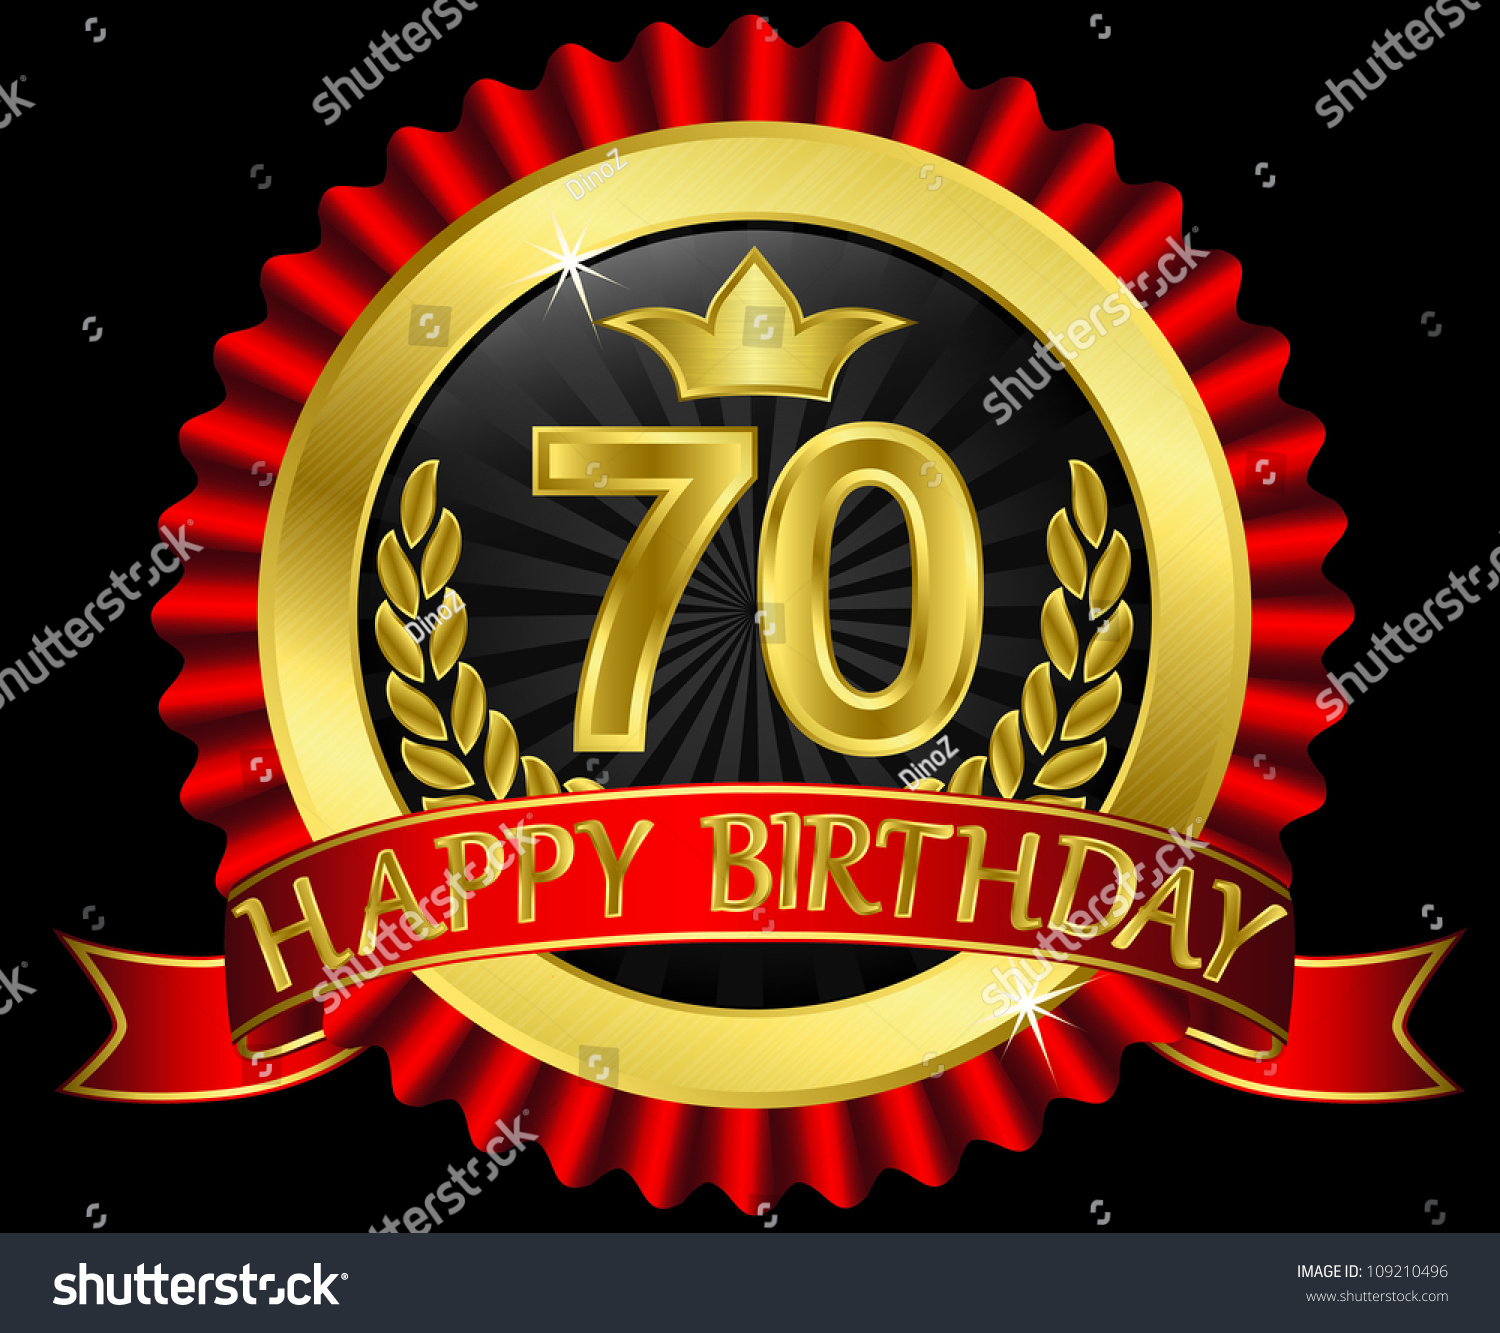 70 Years Happy Birthday Golden Label のベクター画像素材 ロイヤリティフリー